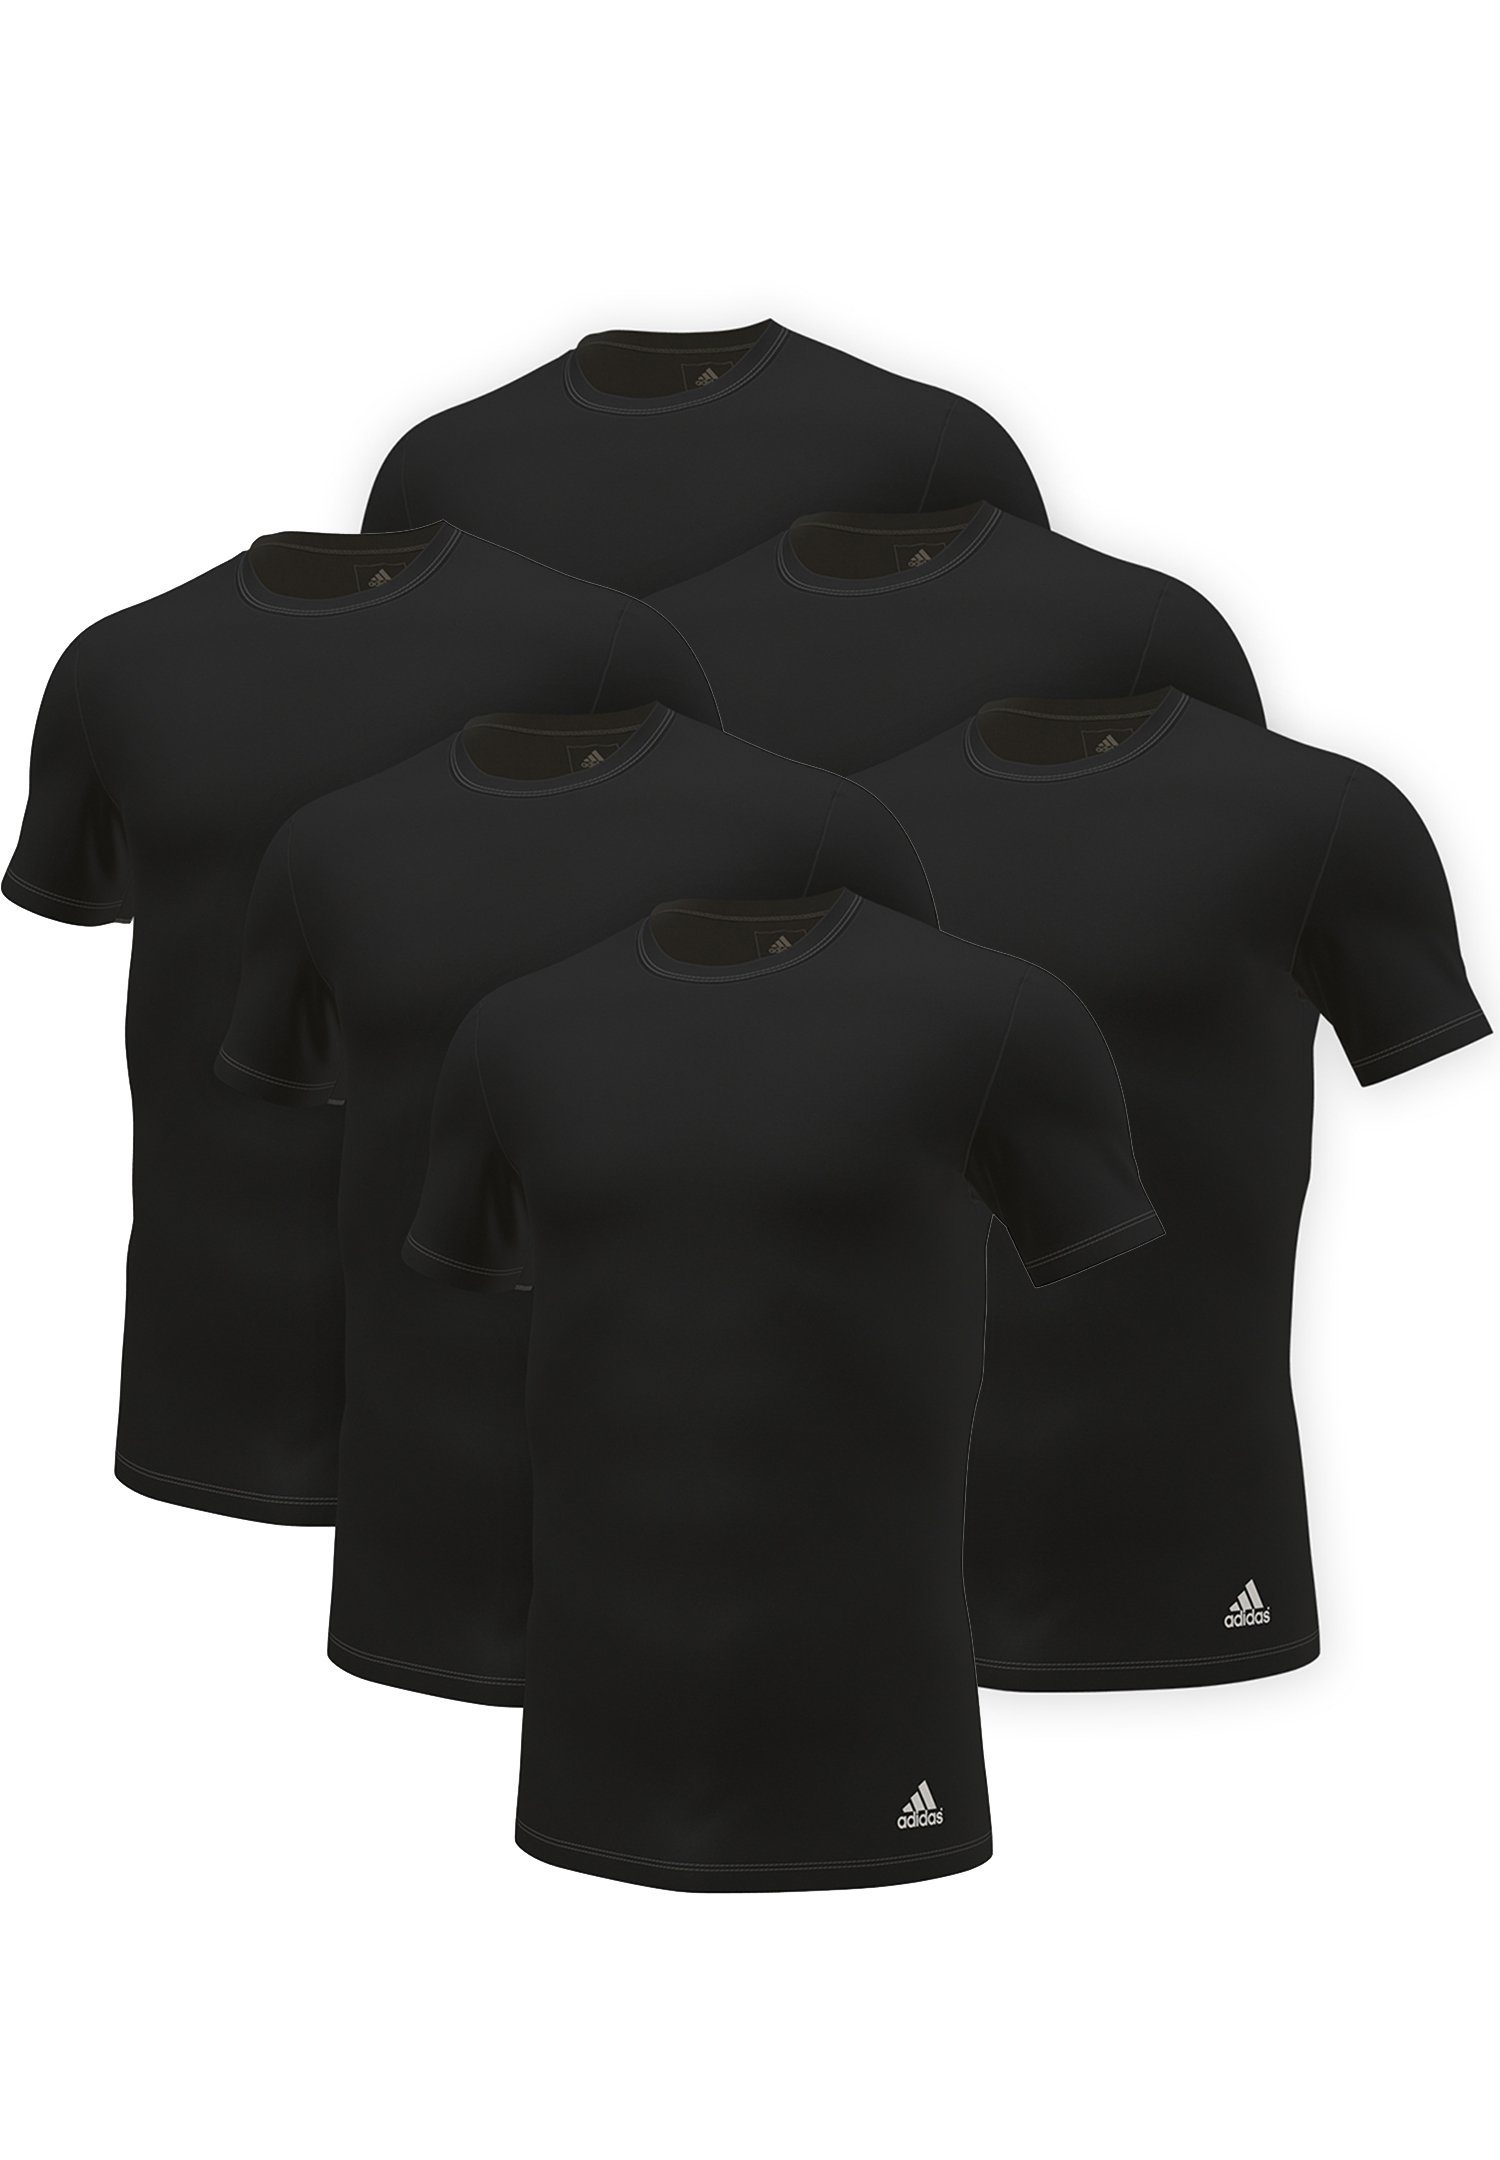 Vorzüglich adidas Performance (6PK) Crew Shirt Neck Poloshirt Black